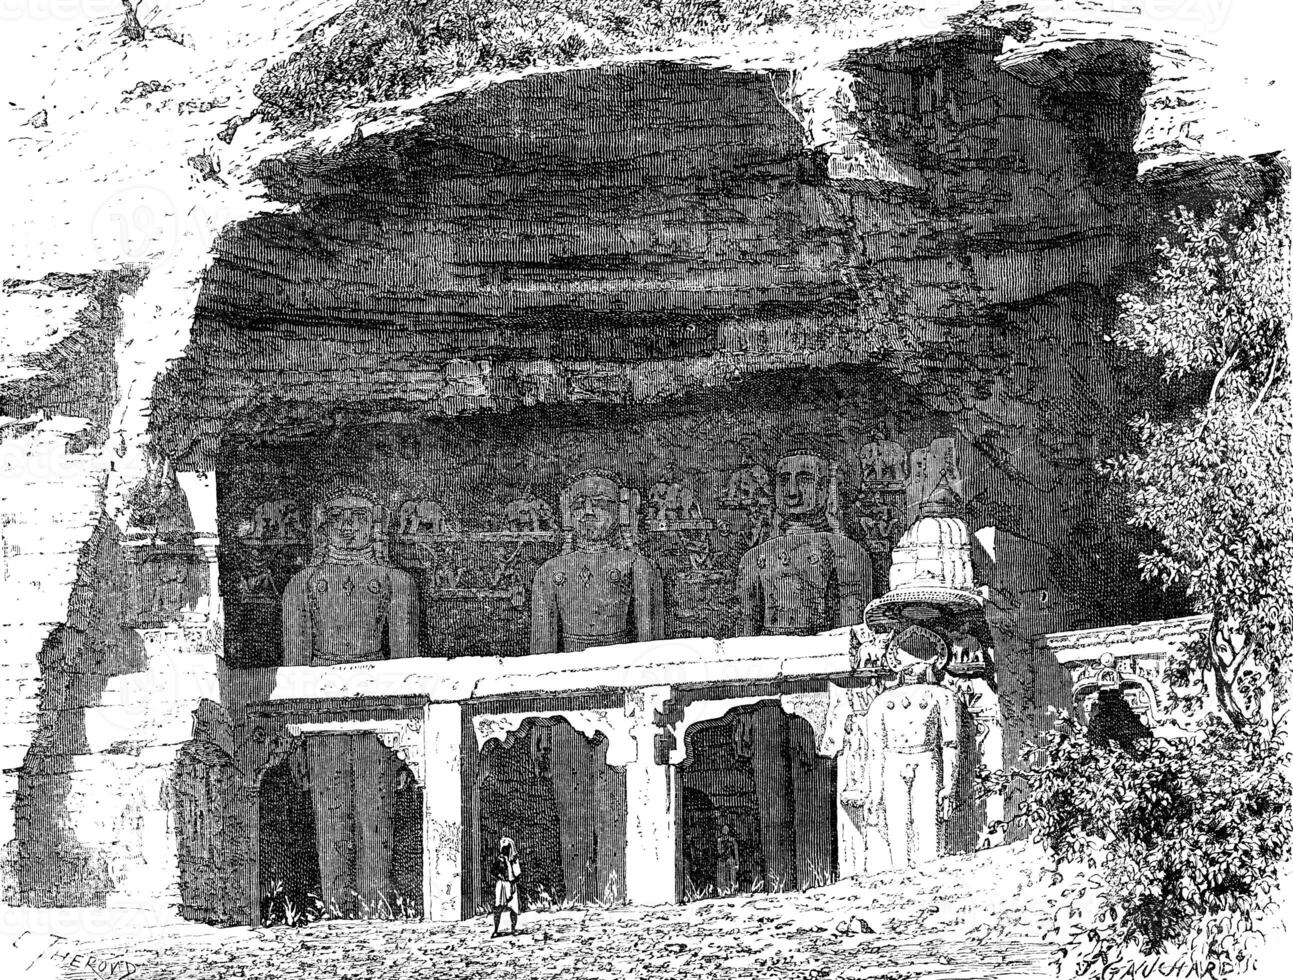 grotta di tirthankaras nel il nostrowhai, Gwalior, Vintage ▾ incisione. foto